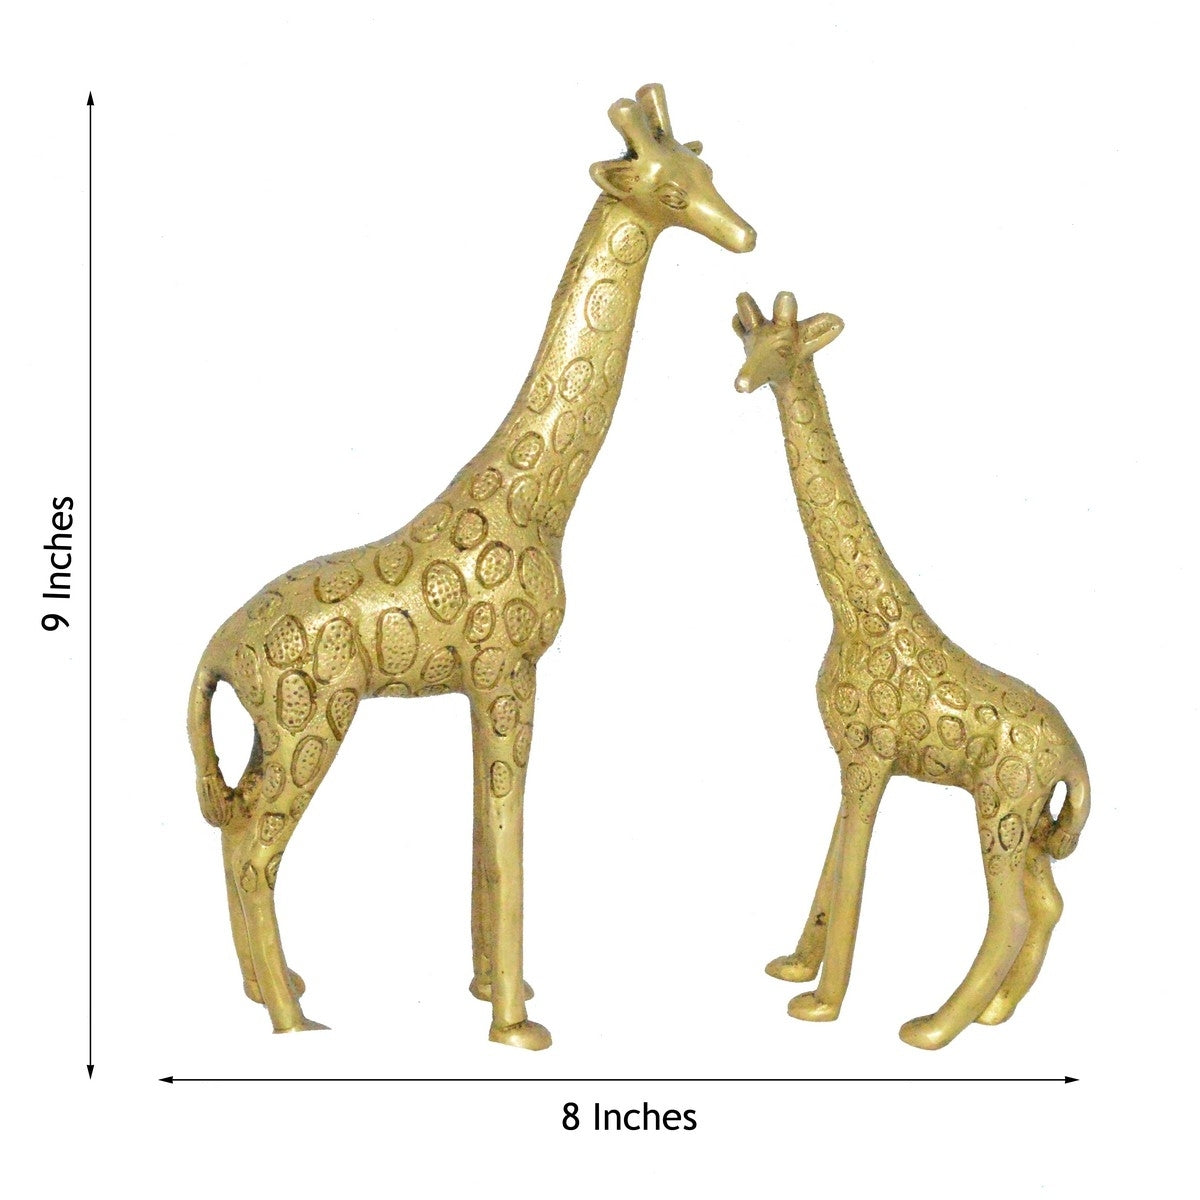 Two Decorative Brass Giraffe Statues Animal Figurines 1